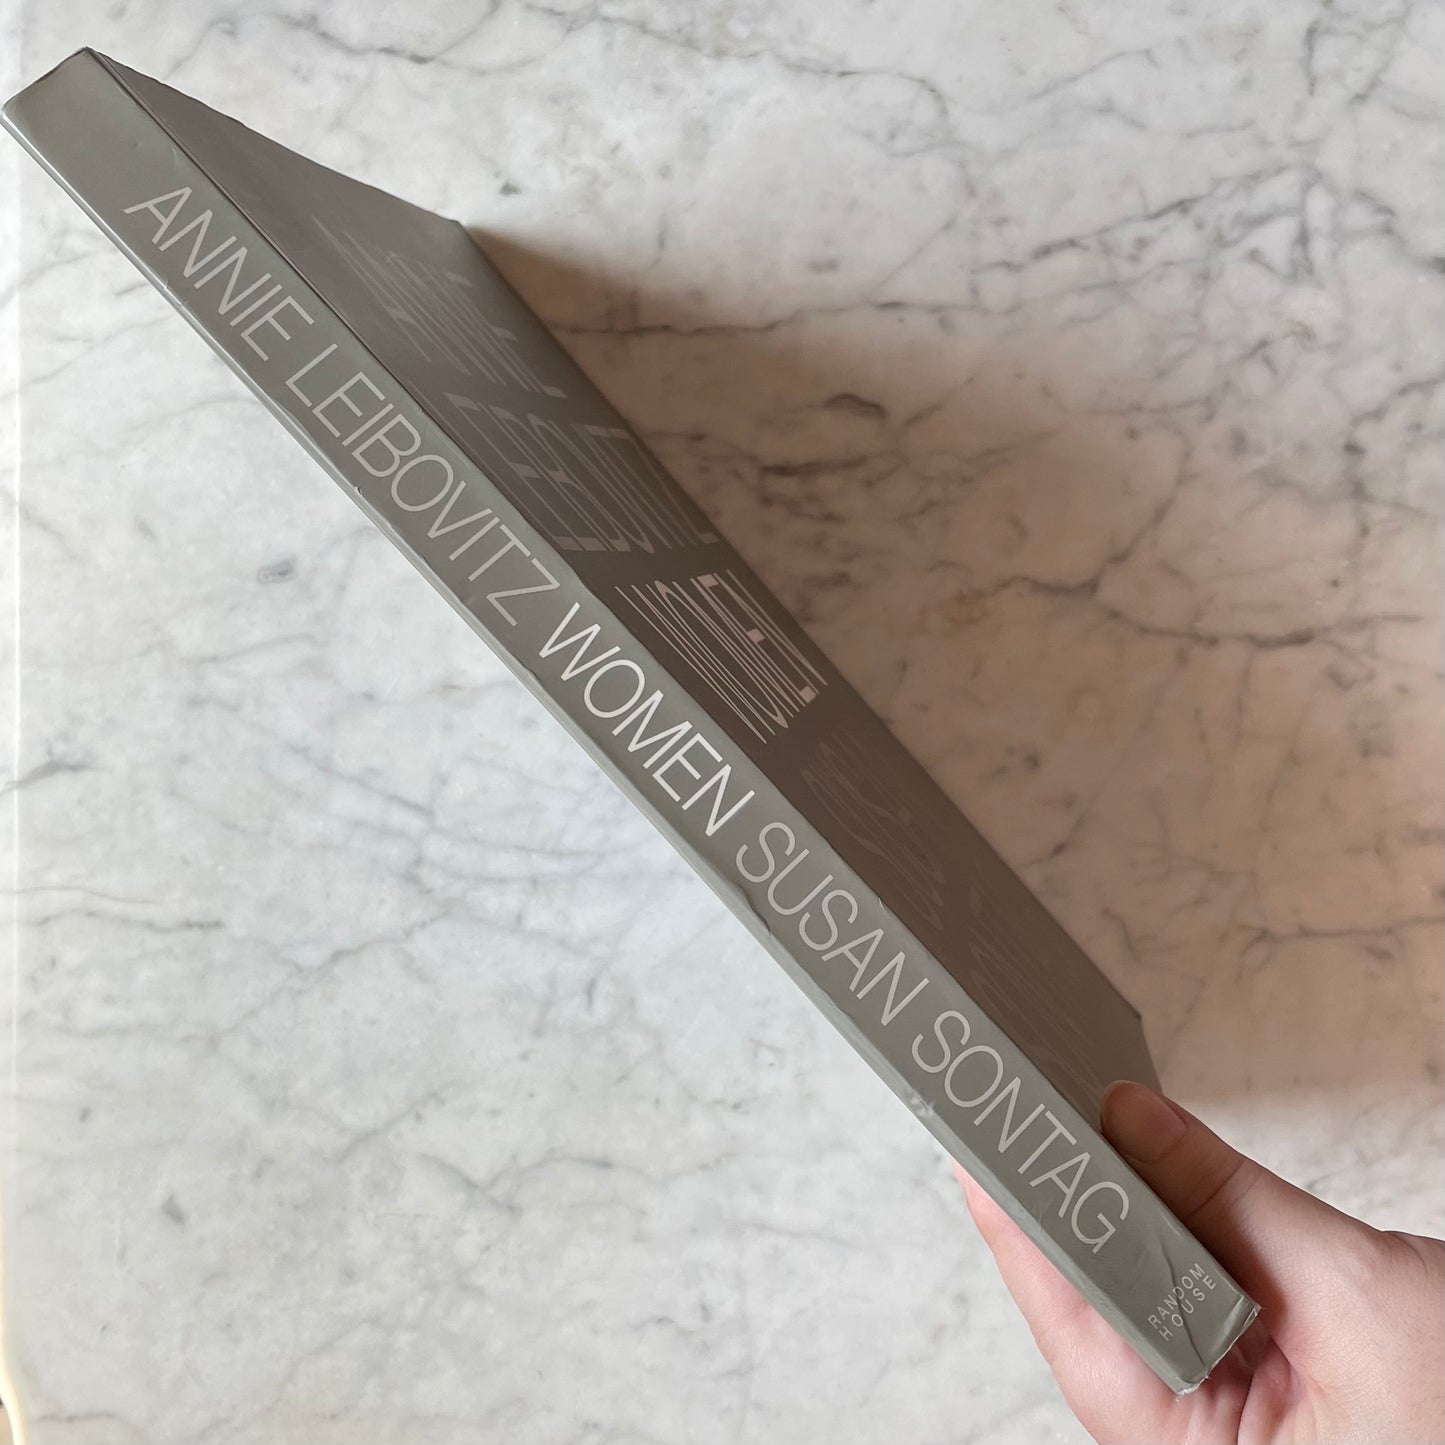 Annie Leibovitz | WOMEN | Intro by Susan Sontag | First Edition Paperback